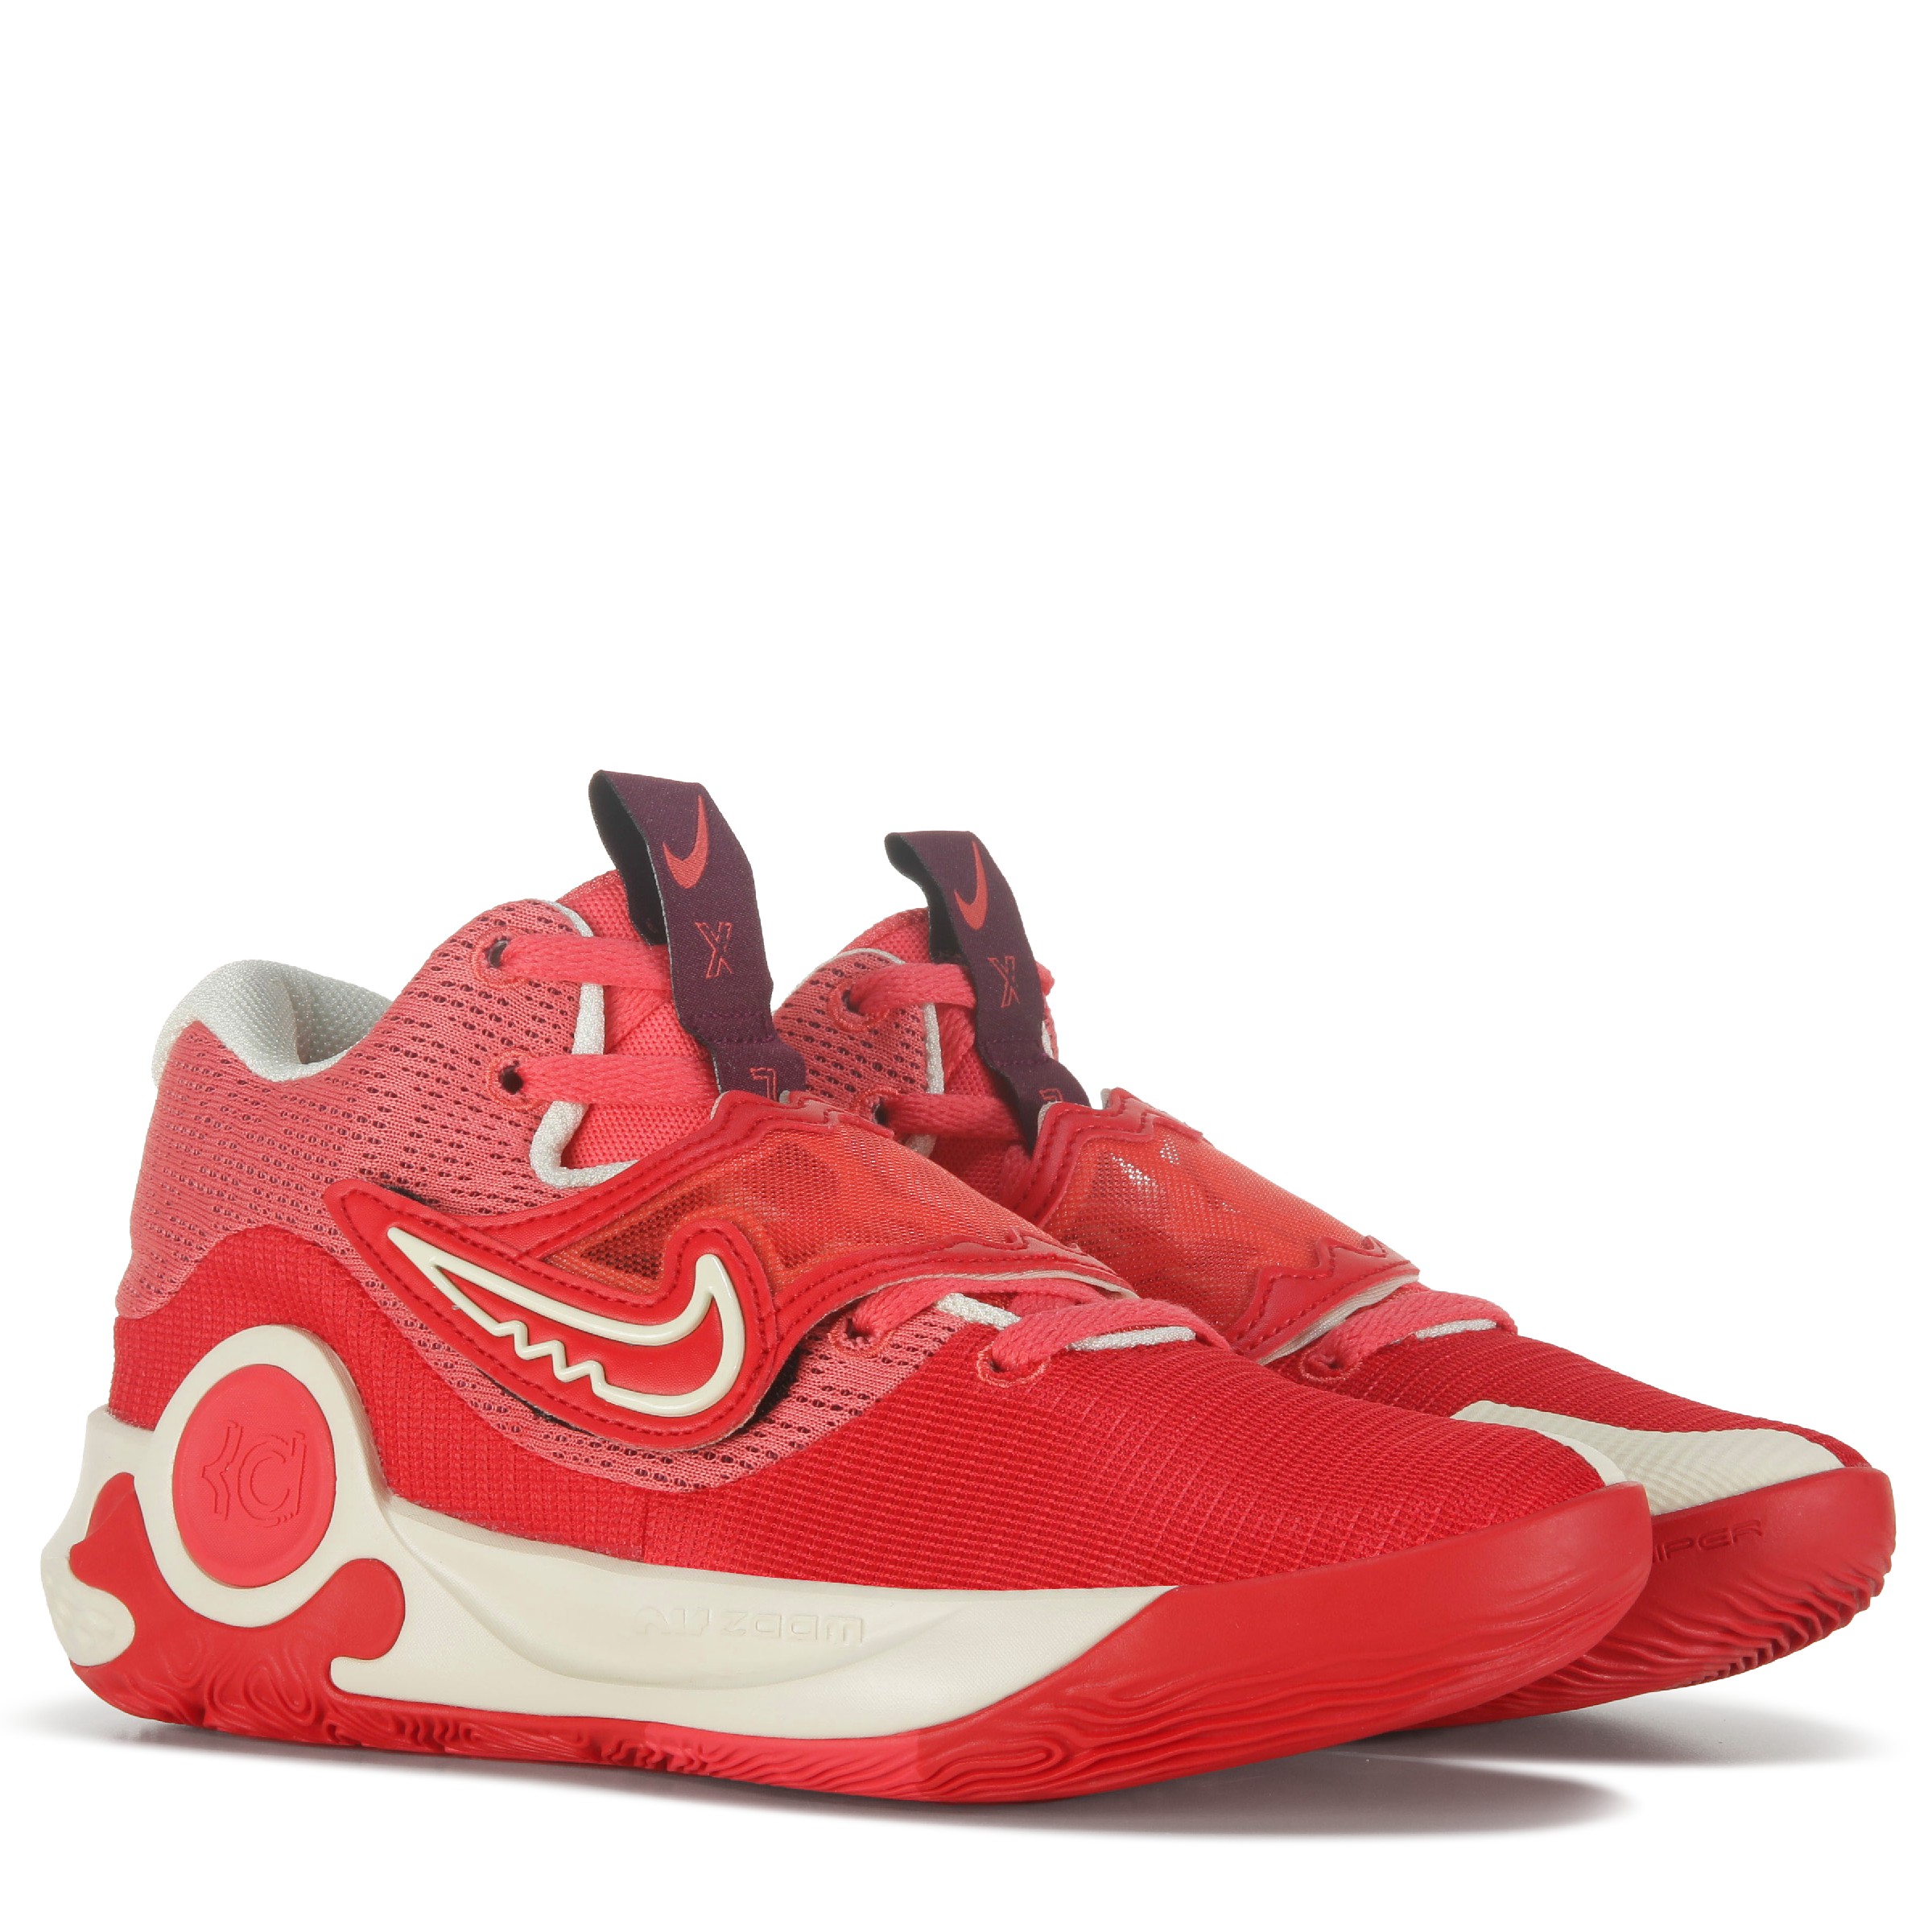 Nike Men's KD Trey 5 X Basketball Shoes